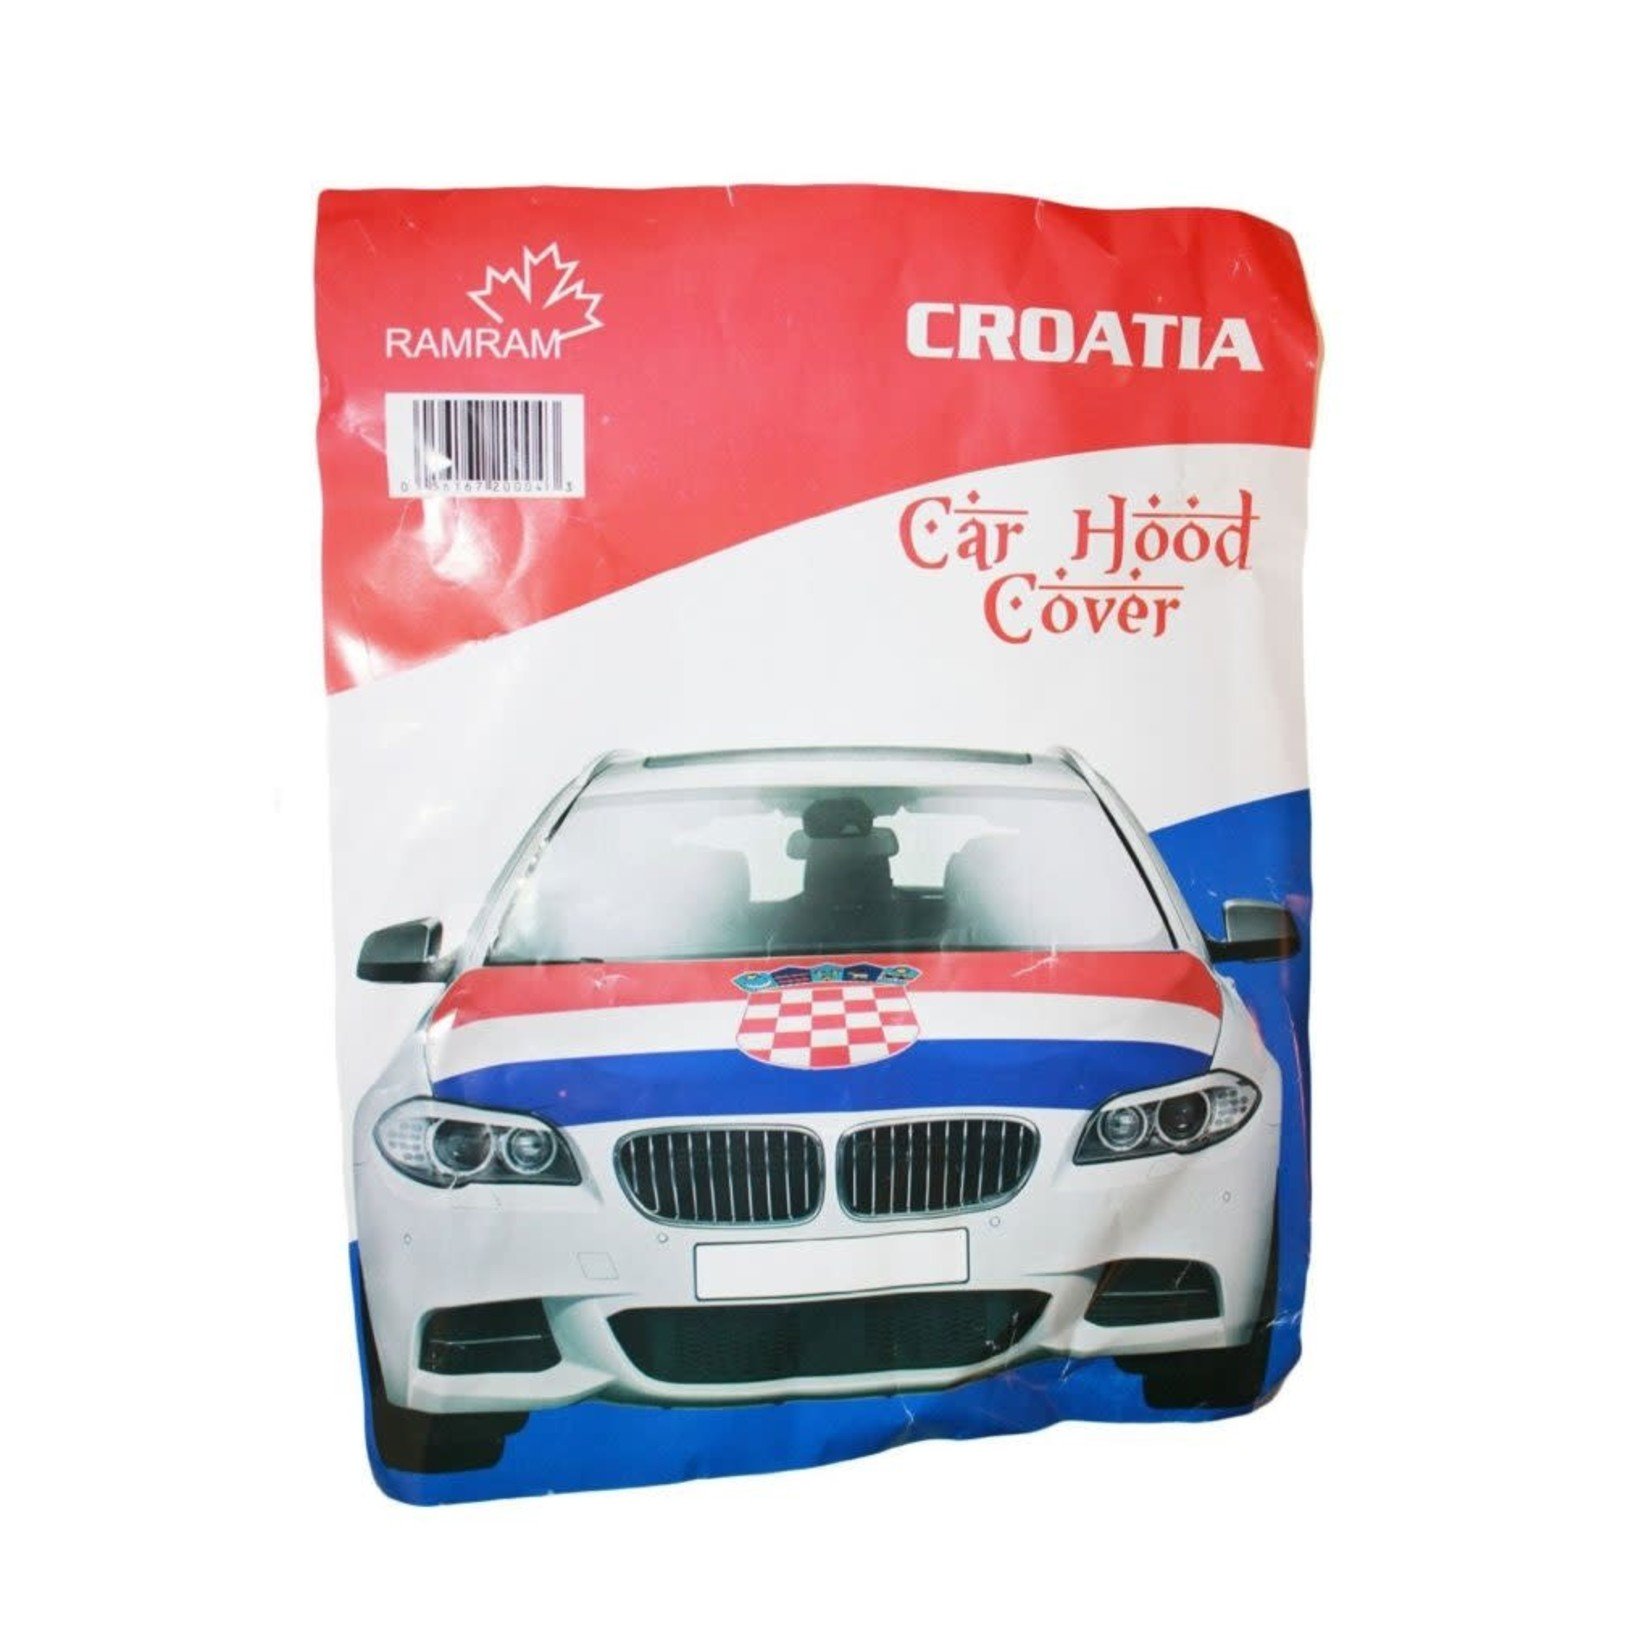 Croatia Car Hood Cover